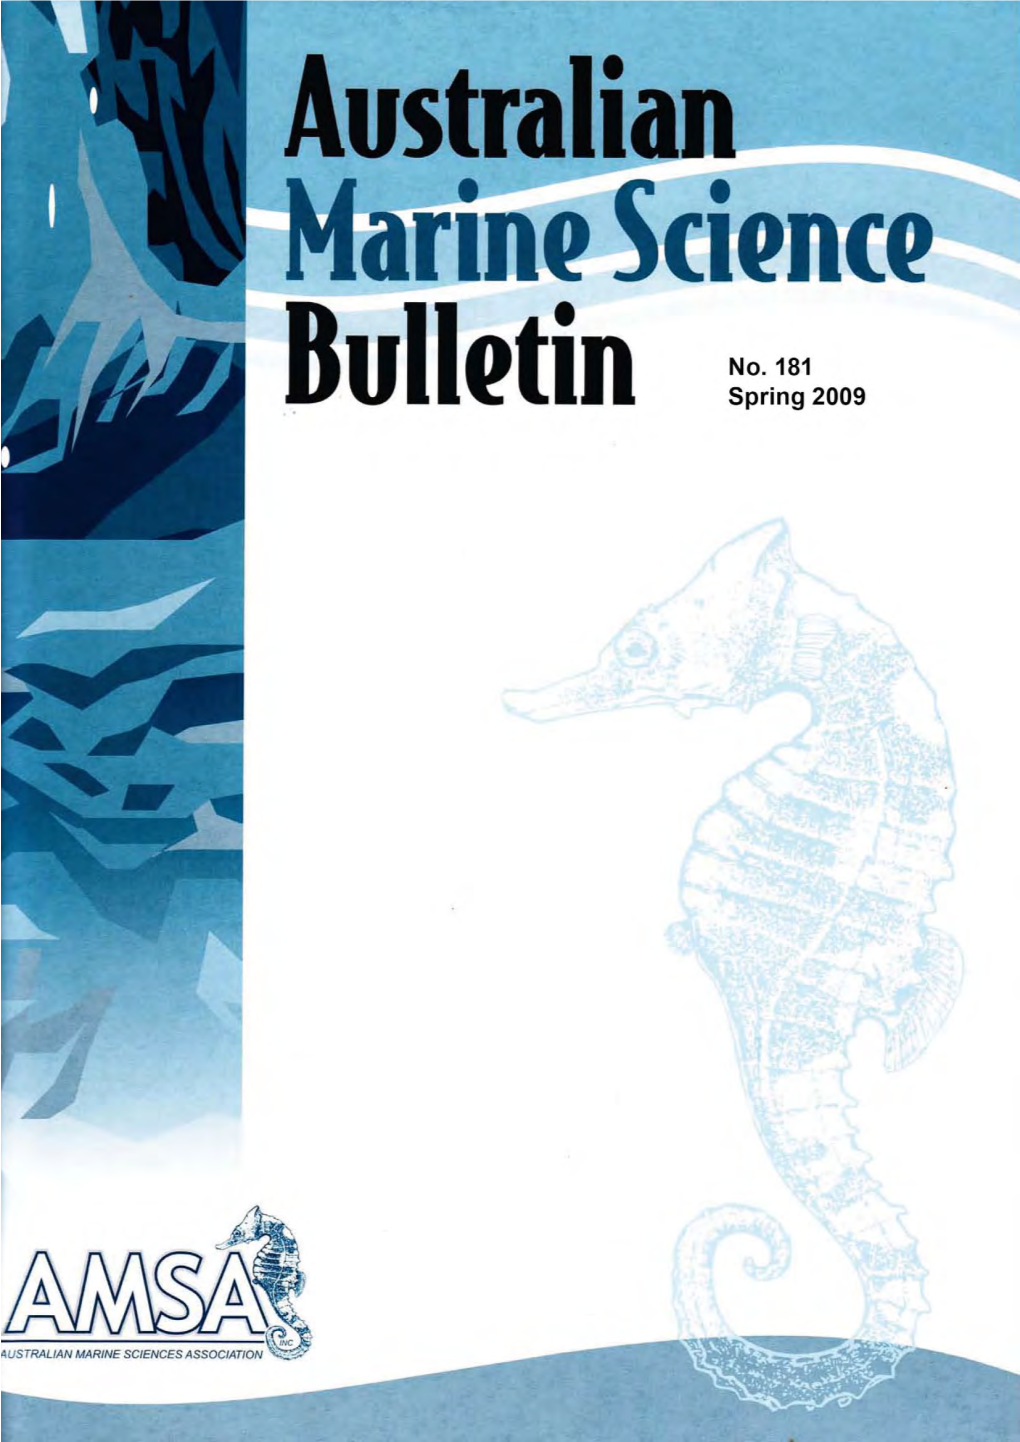 Australian Marine Sciences Association Inc